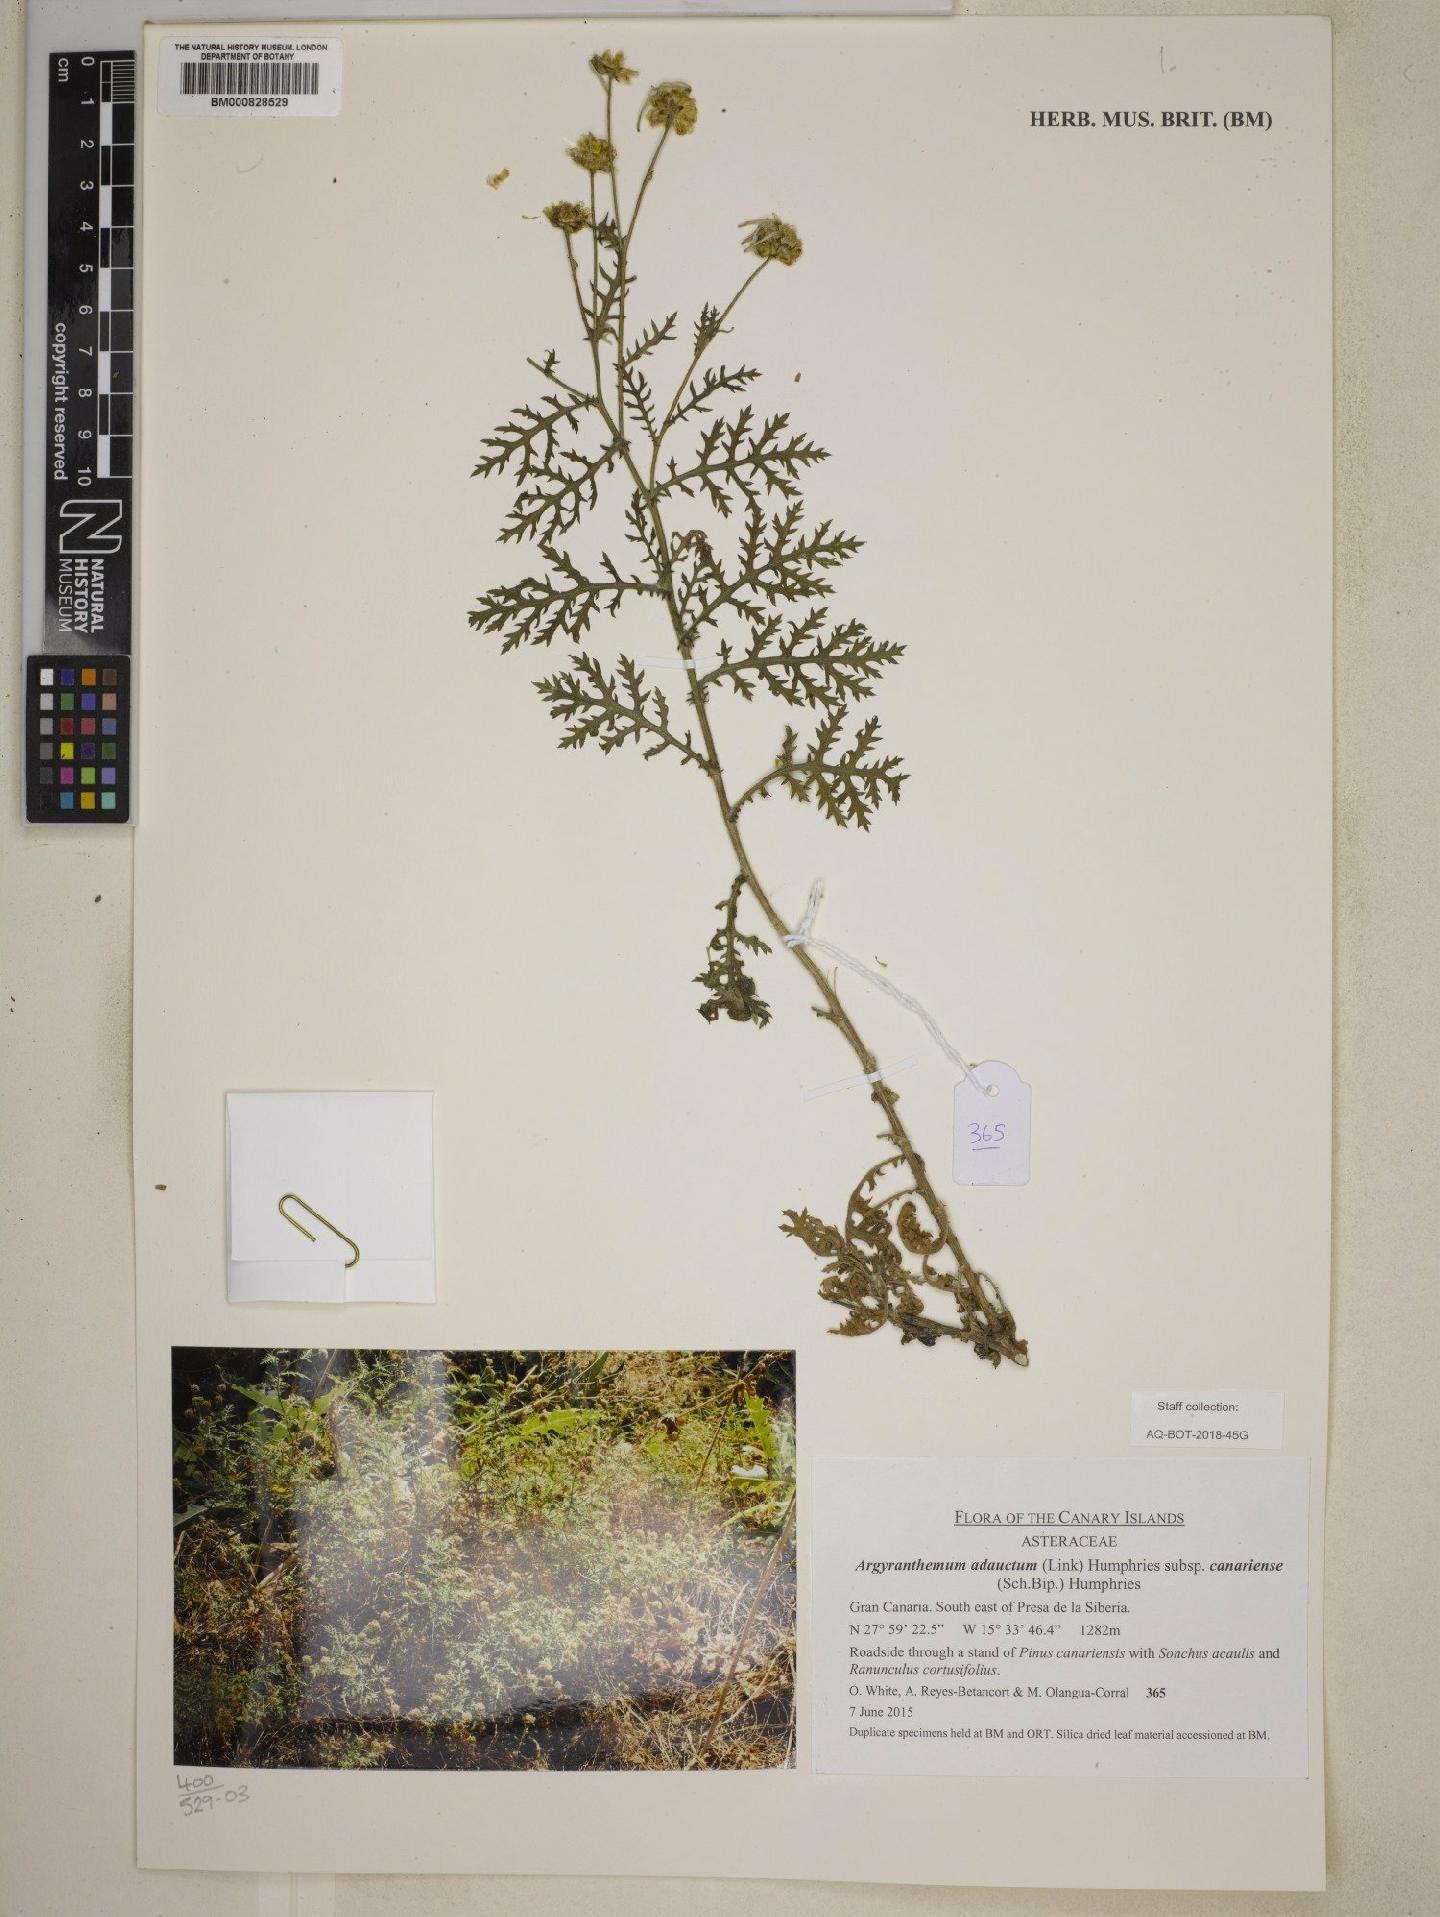 To NHMUK collection (Argyranthemum adauctum subsp. canariense (Sch.Bip.) Humphries; NHMUK:ecatalogue:9072551)